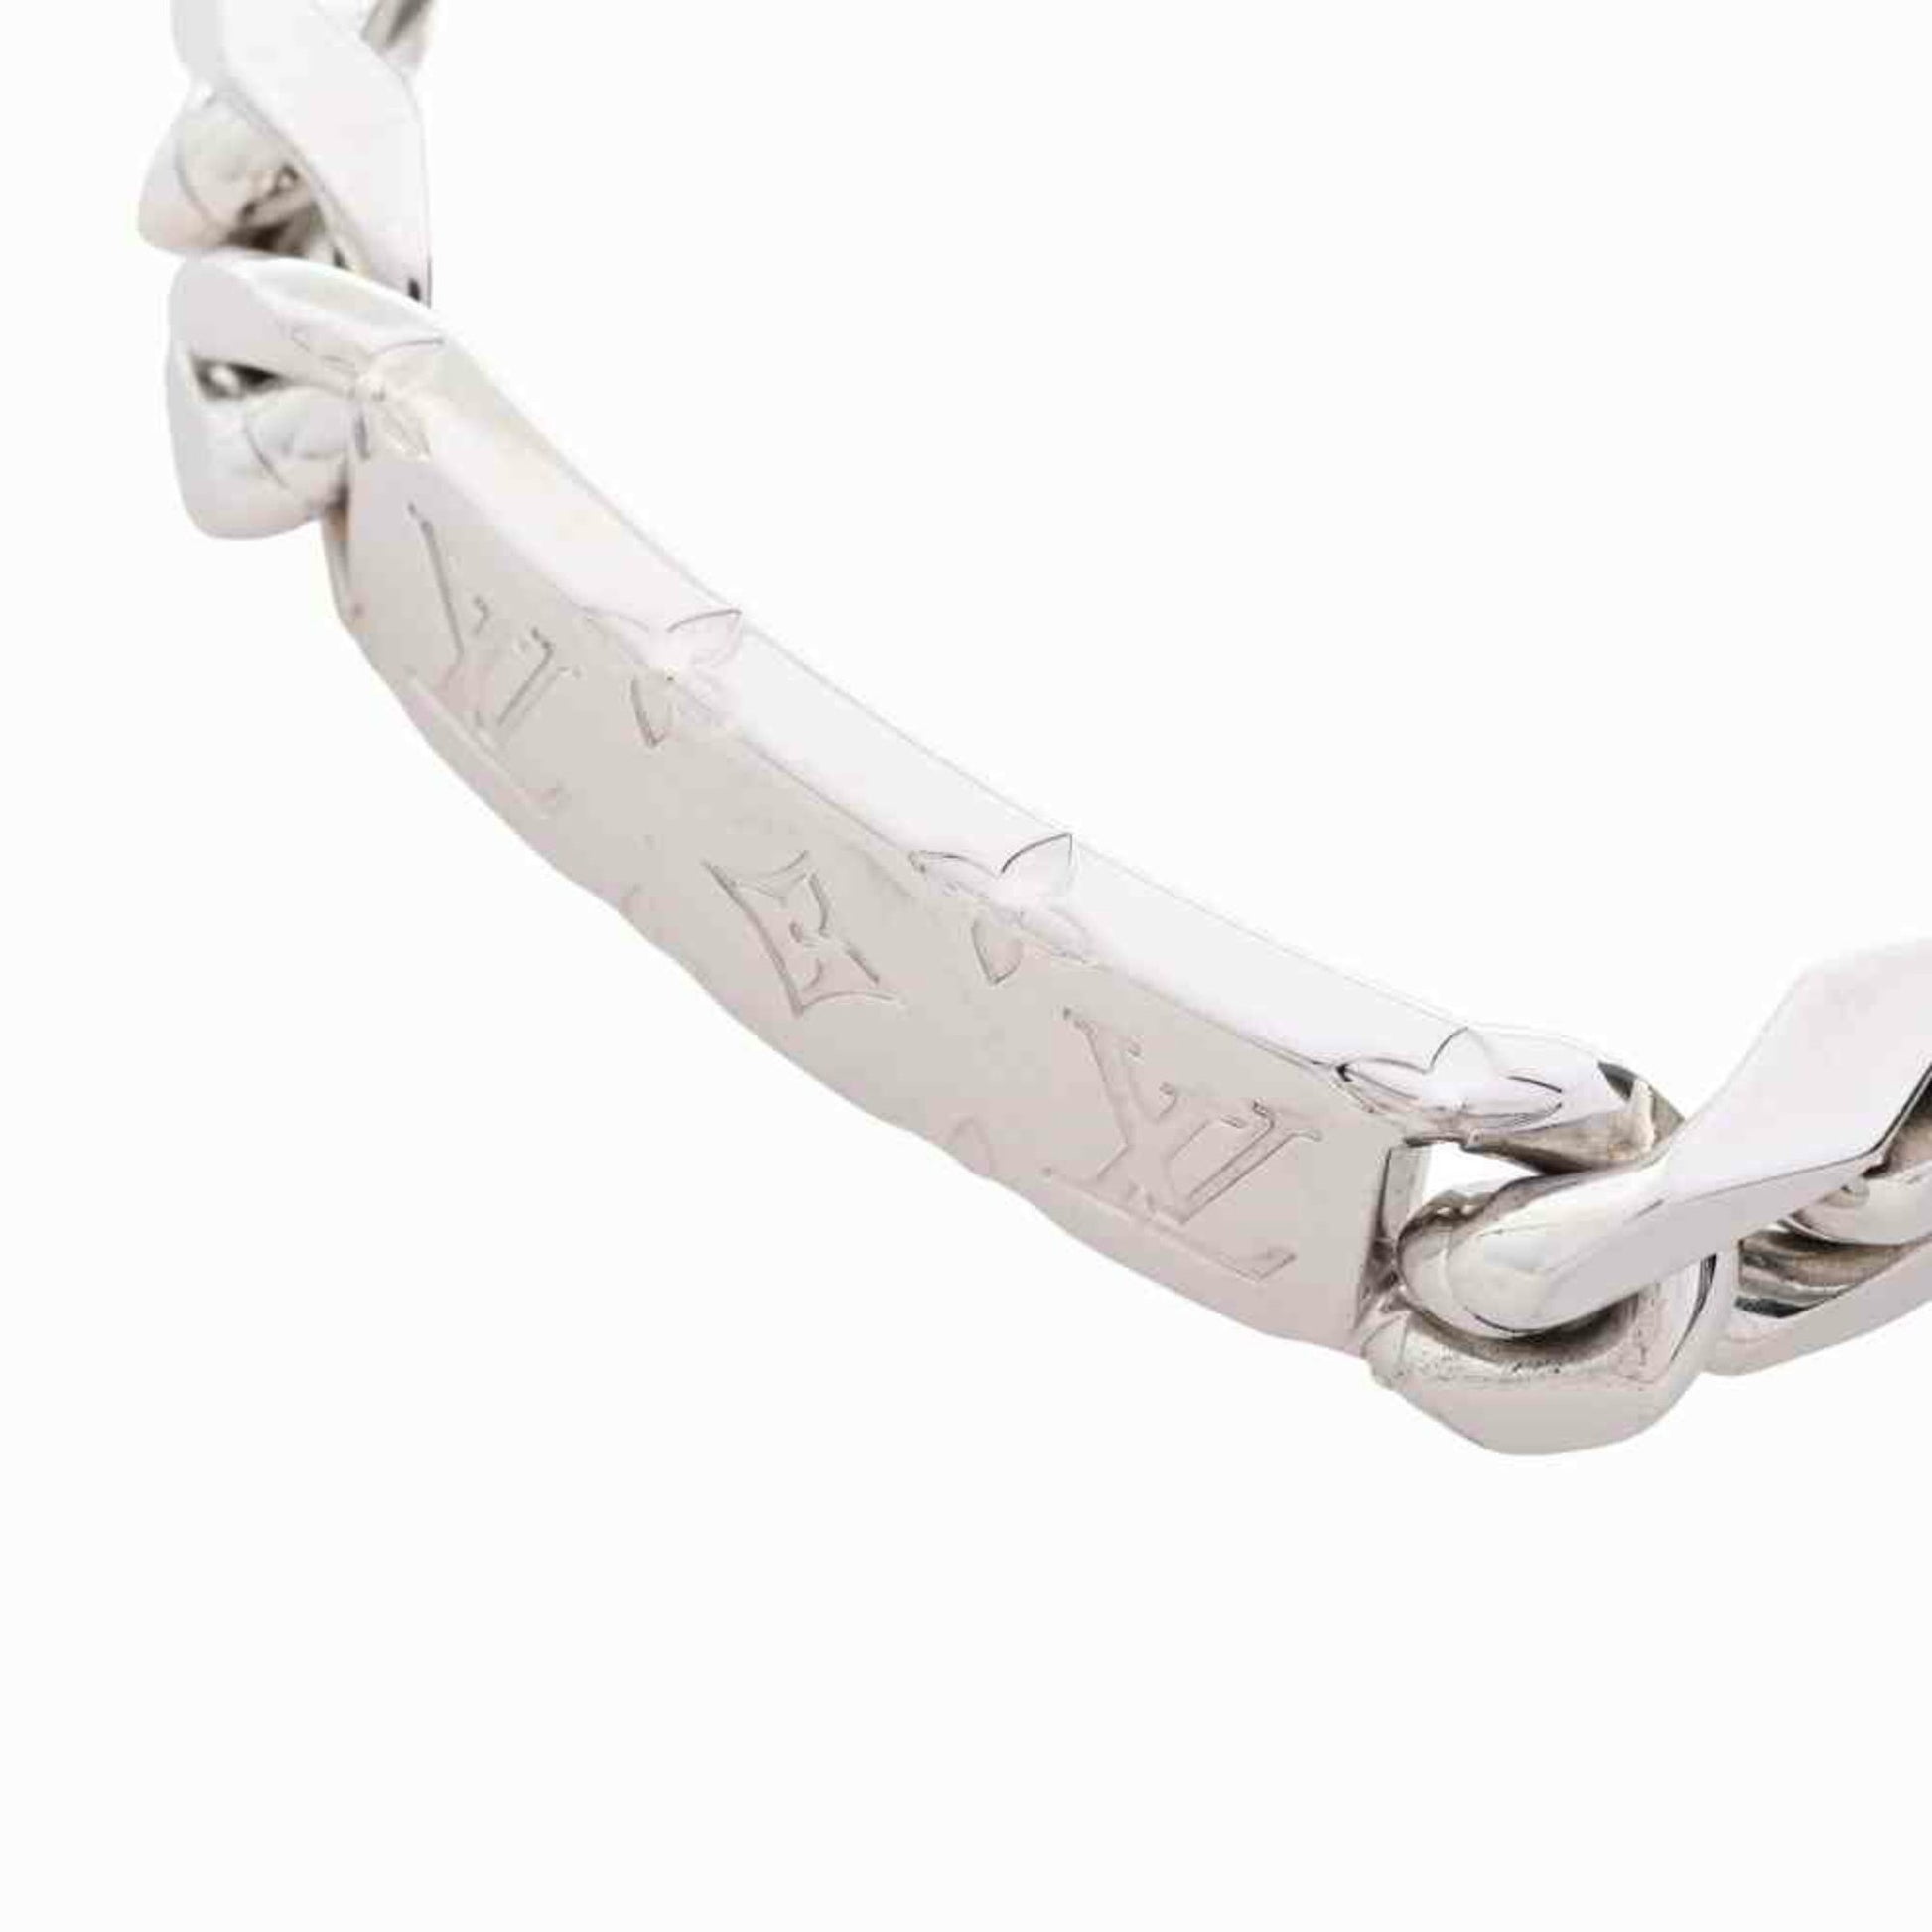 LOUIS VUITTON M00269 Monogram Chain Men's Bracelet w/Box Silver JAPAN USED